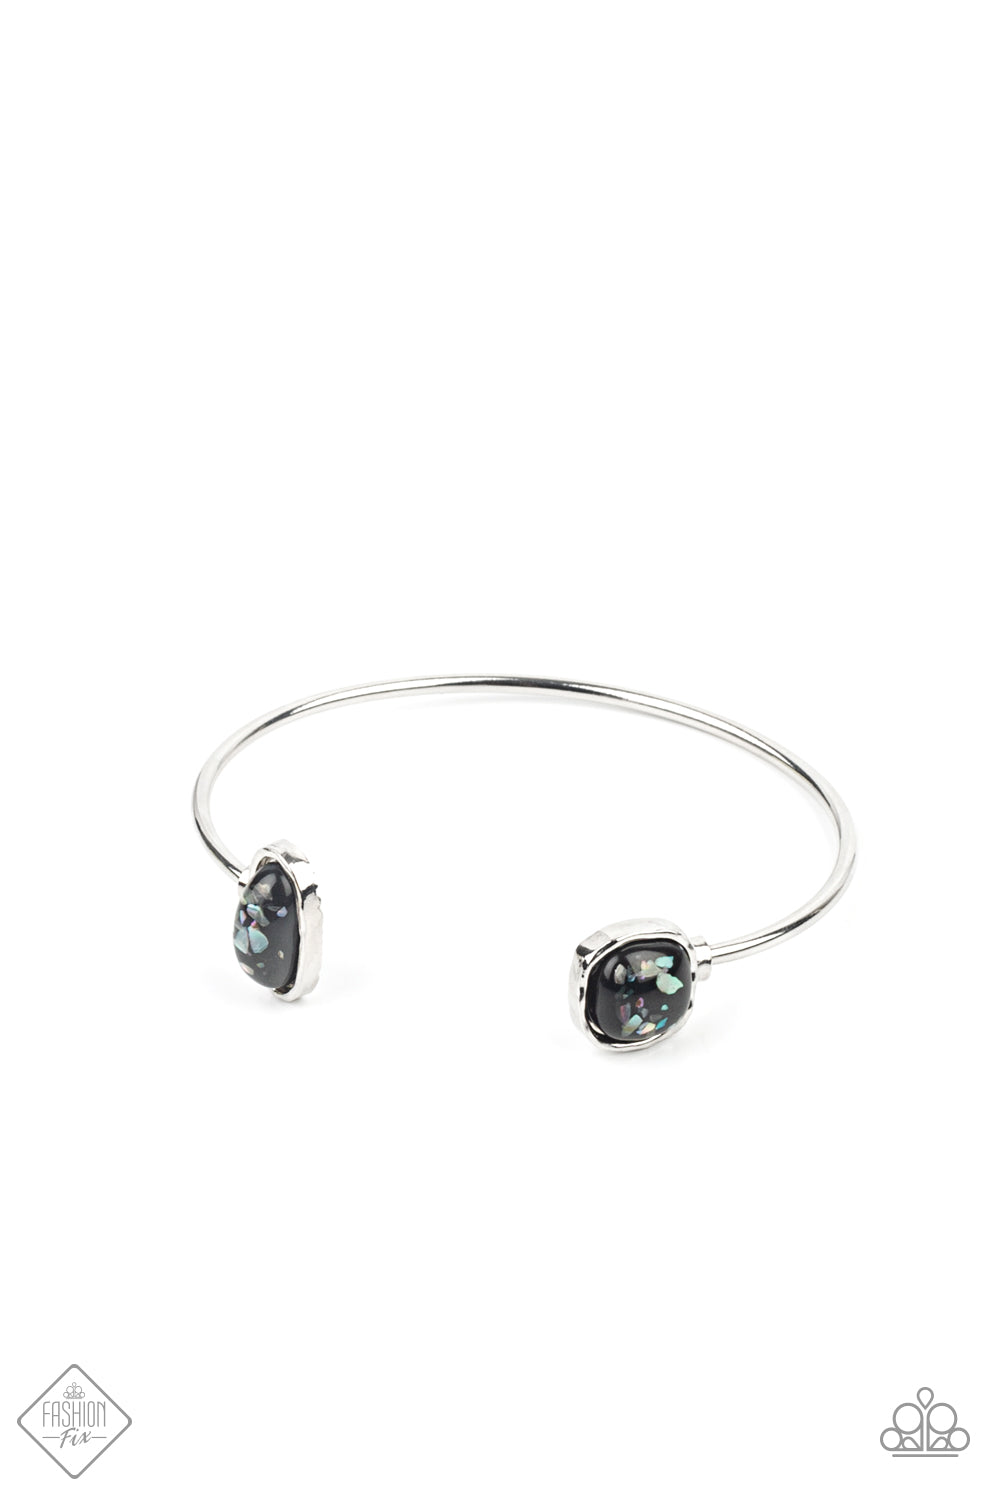 So Jelly - Black iridescent necklace w/ matching bracelet (June 2021 - Fashion Fix)